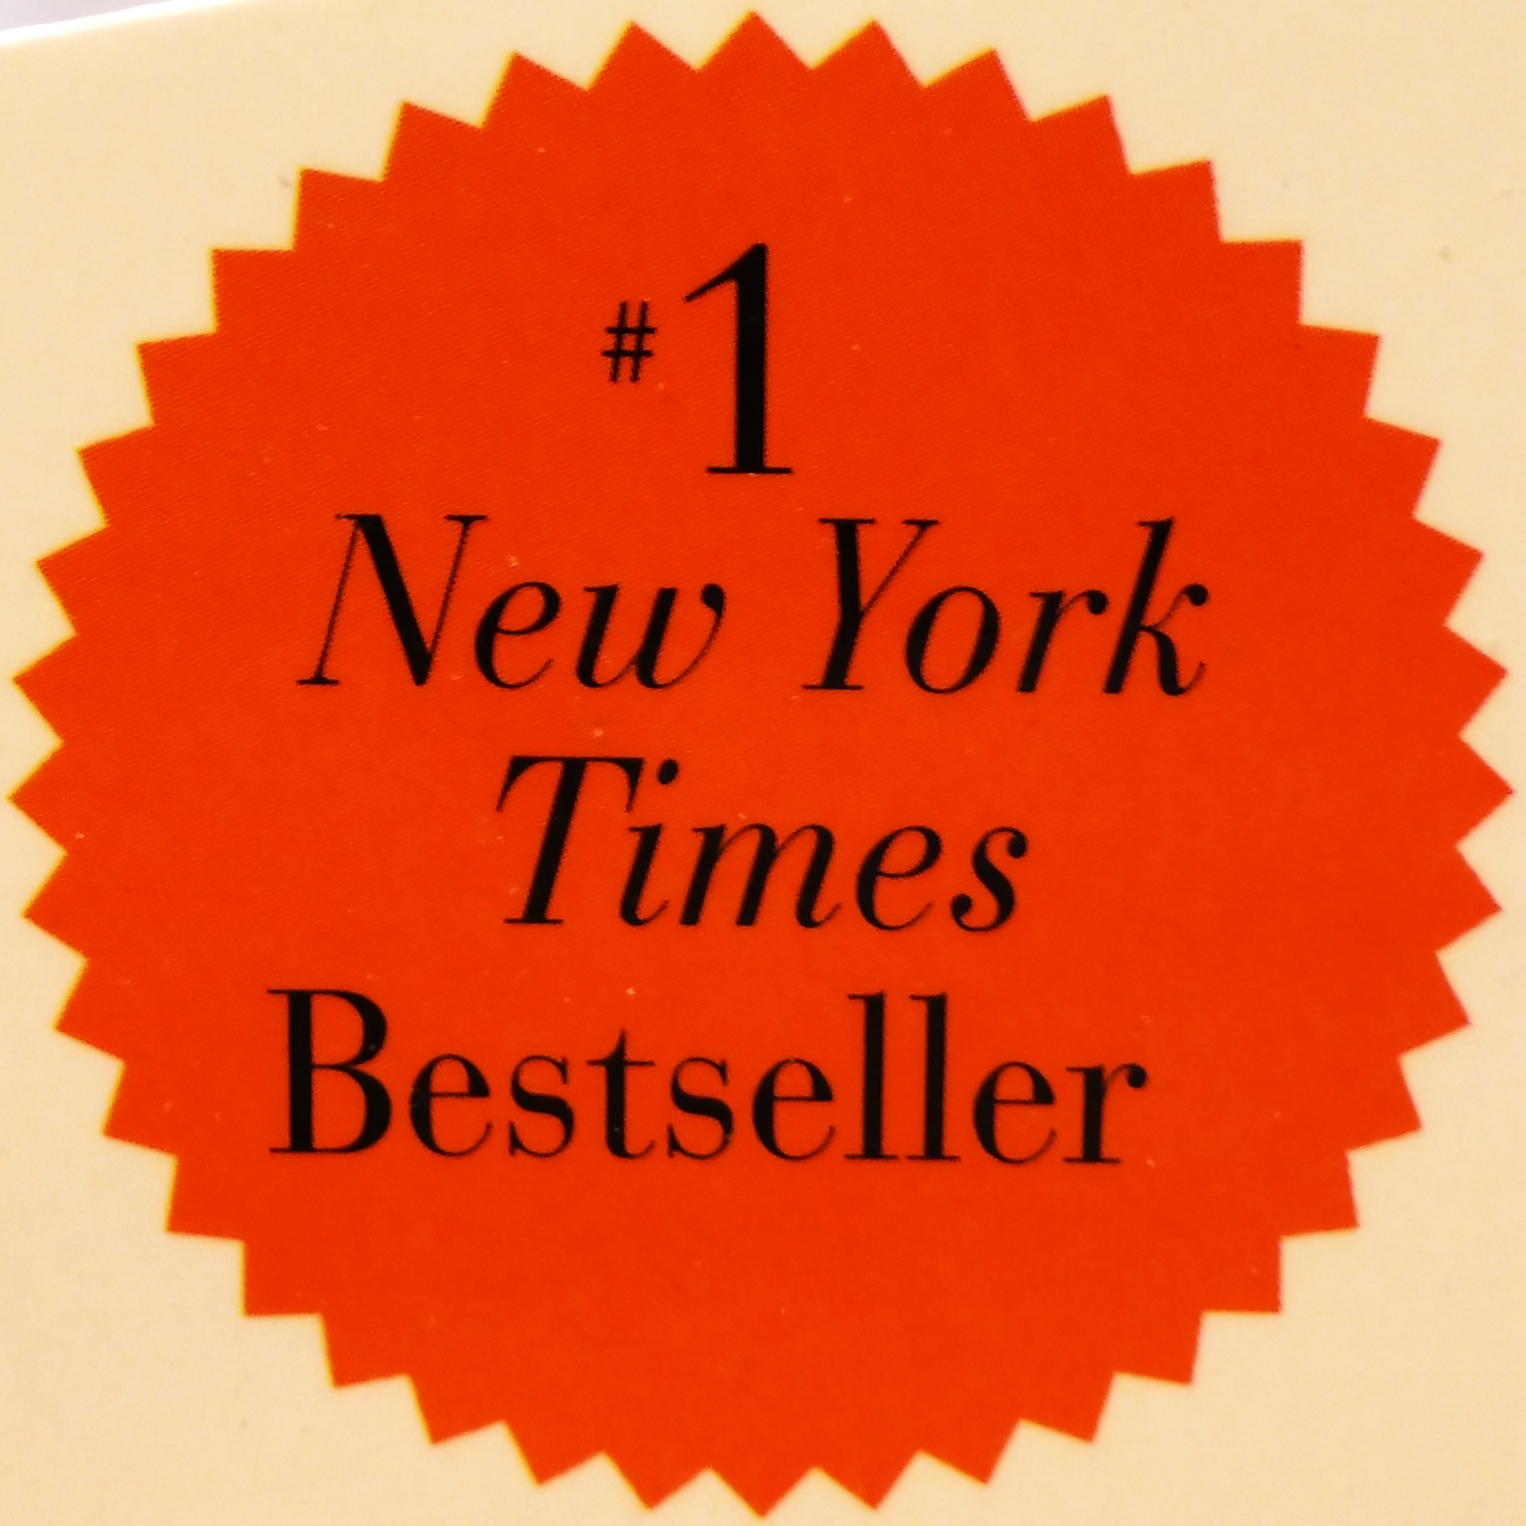 1 New York Times Bestseller Flickr Photo Sharing!